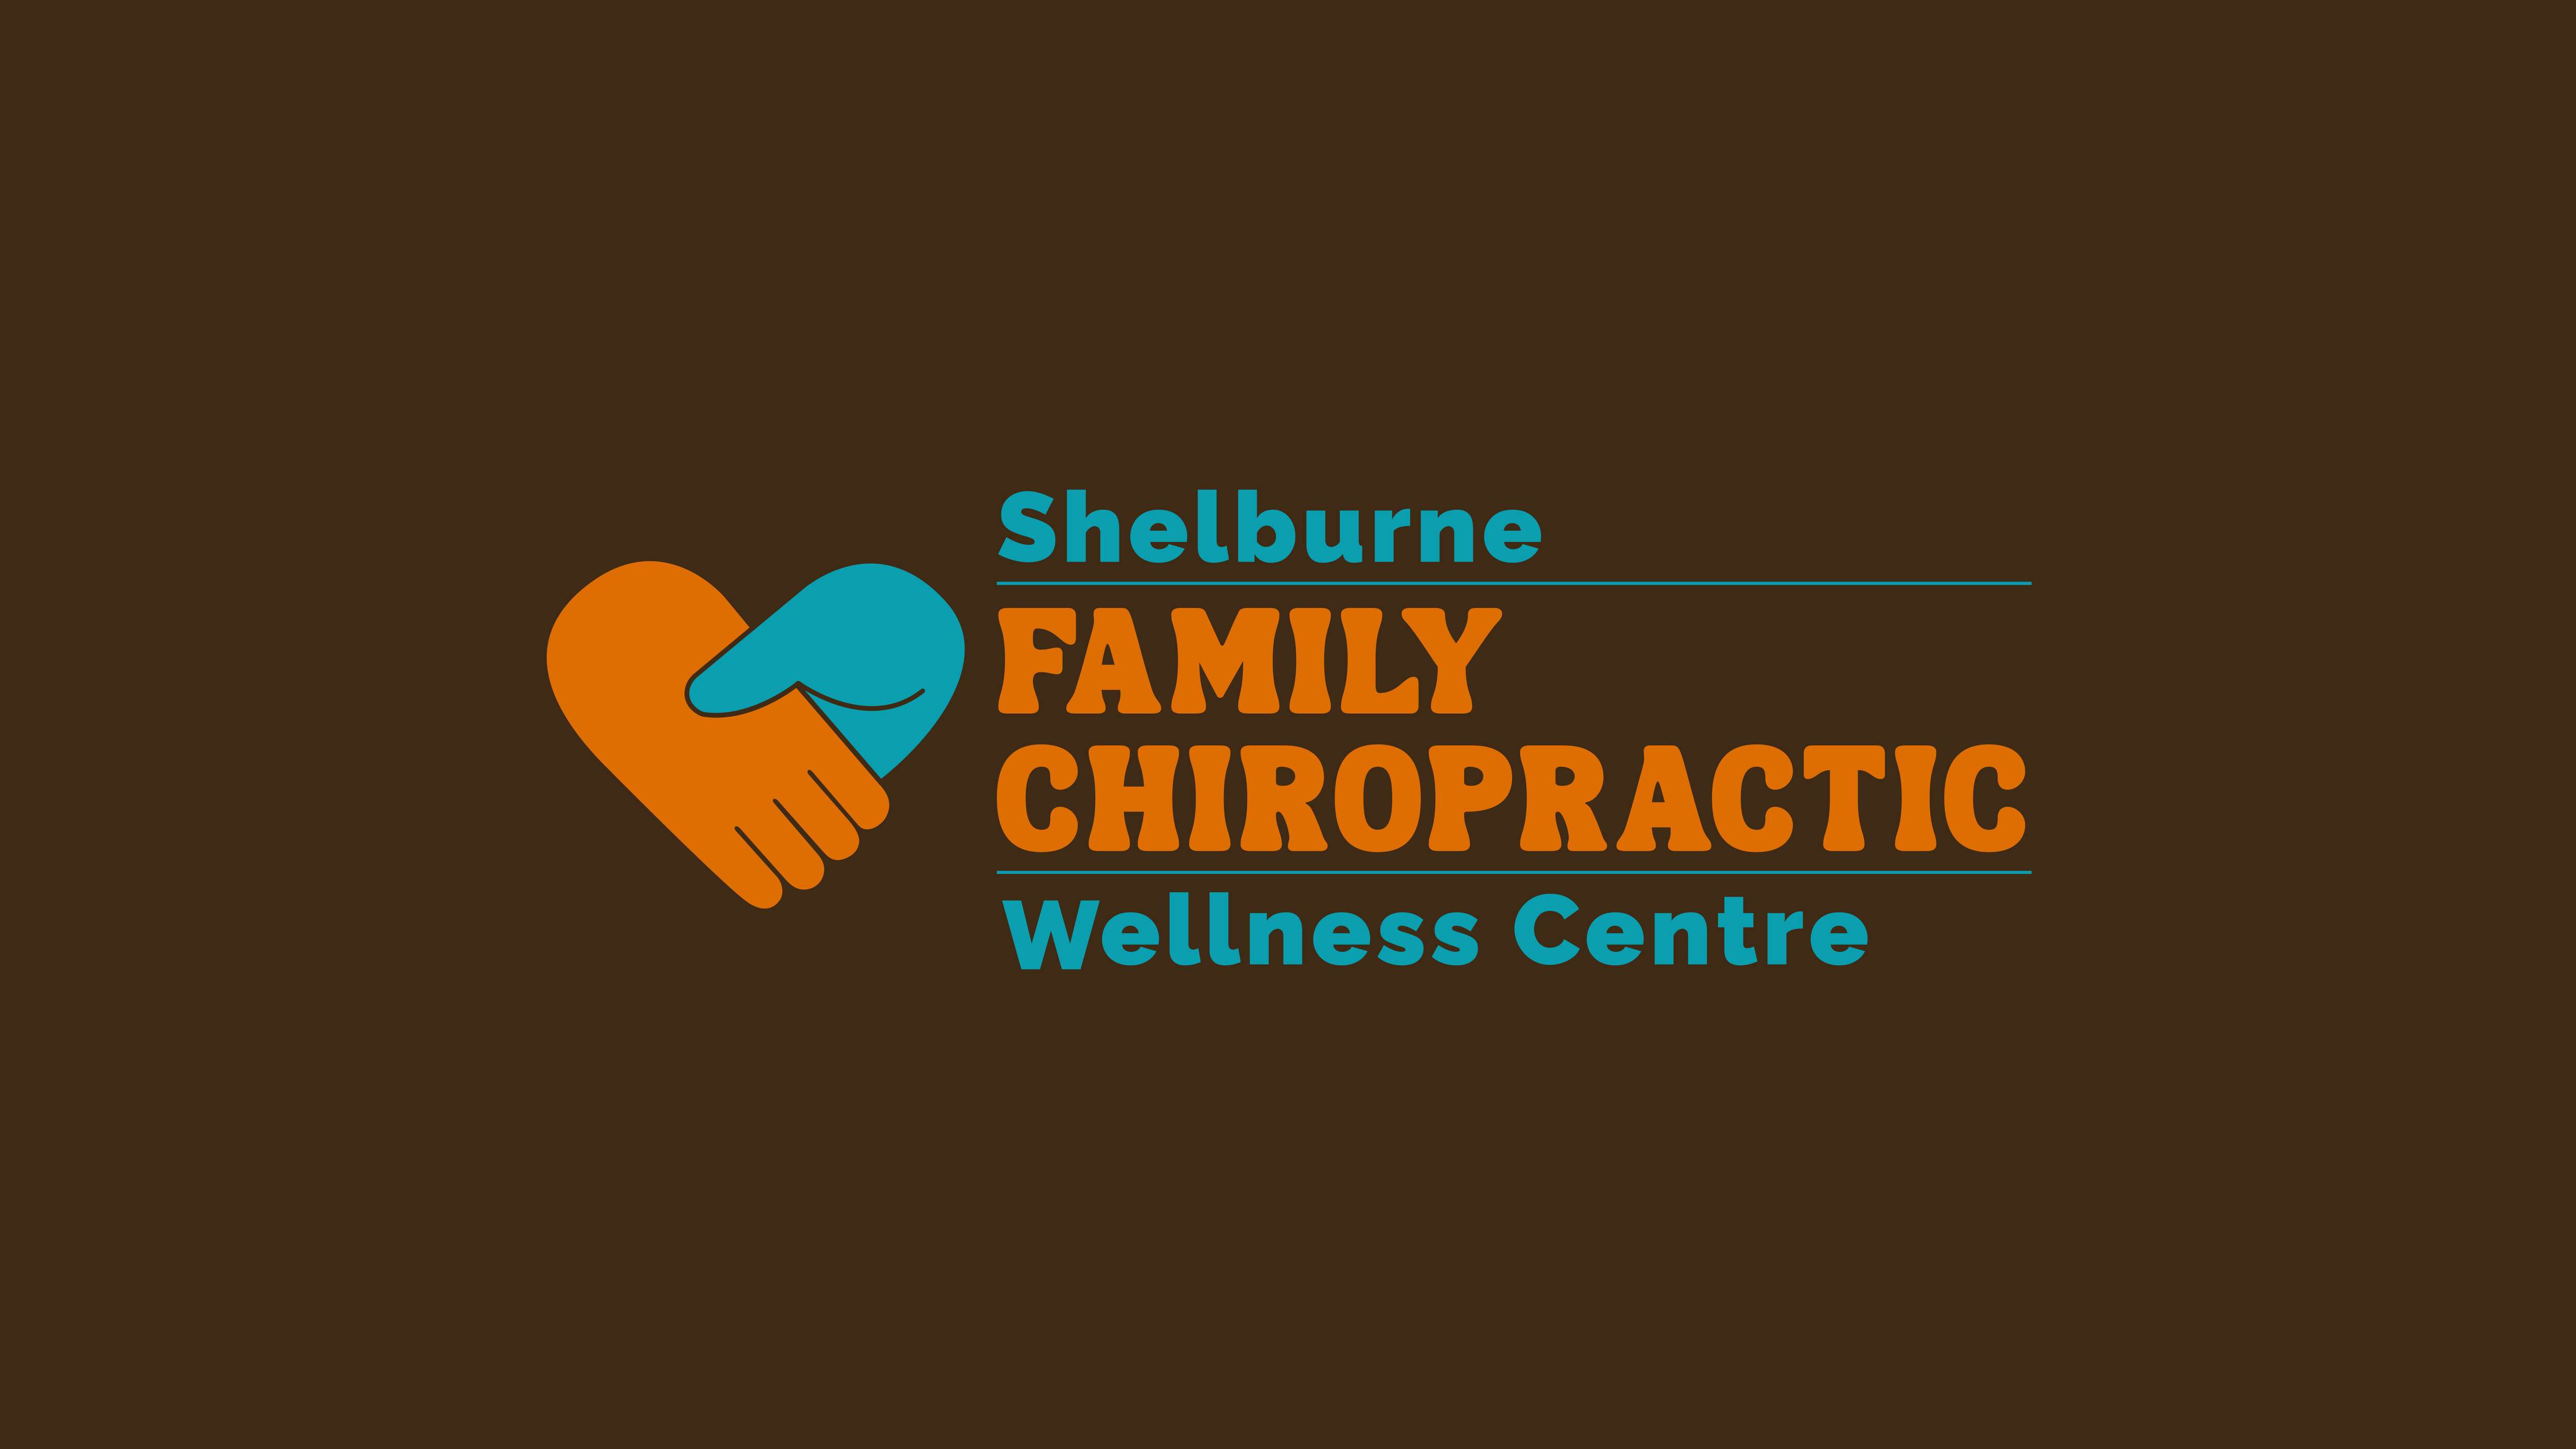 Shelburne Family Chiropractic